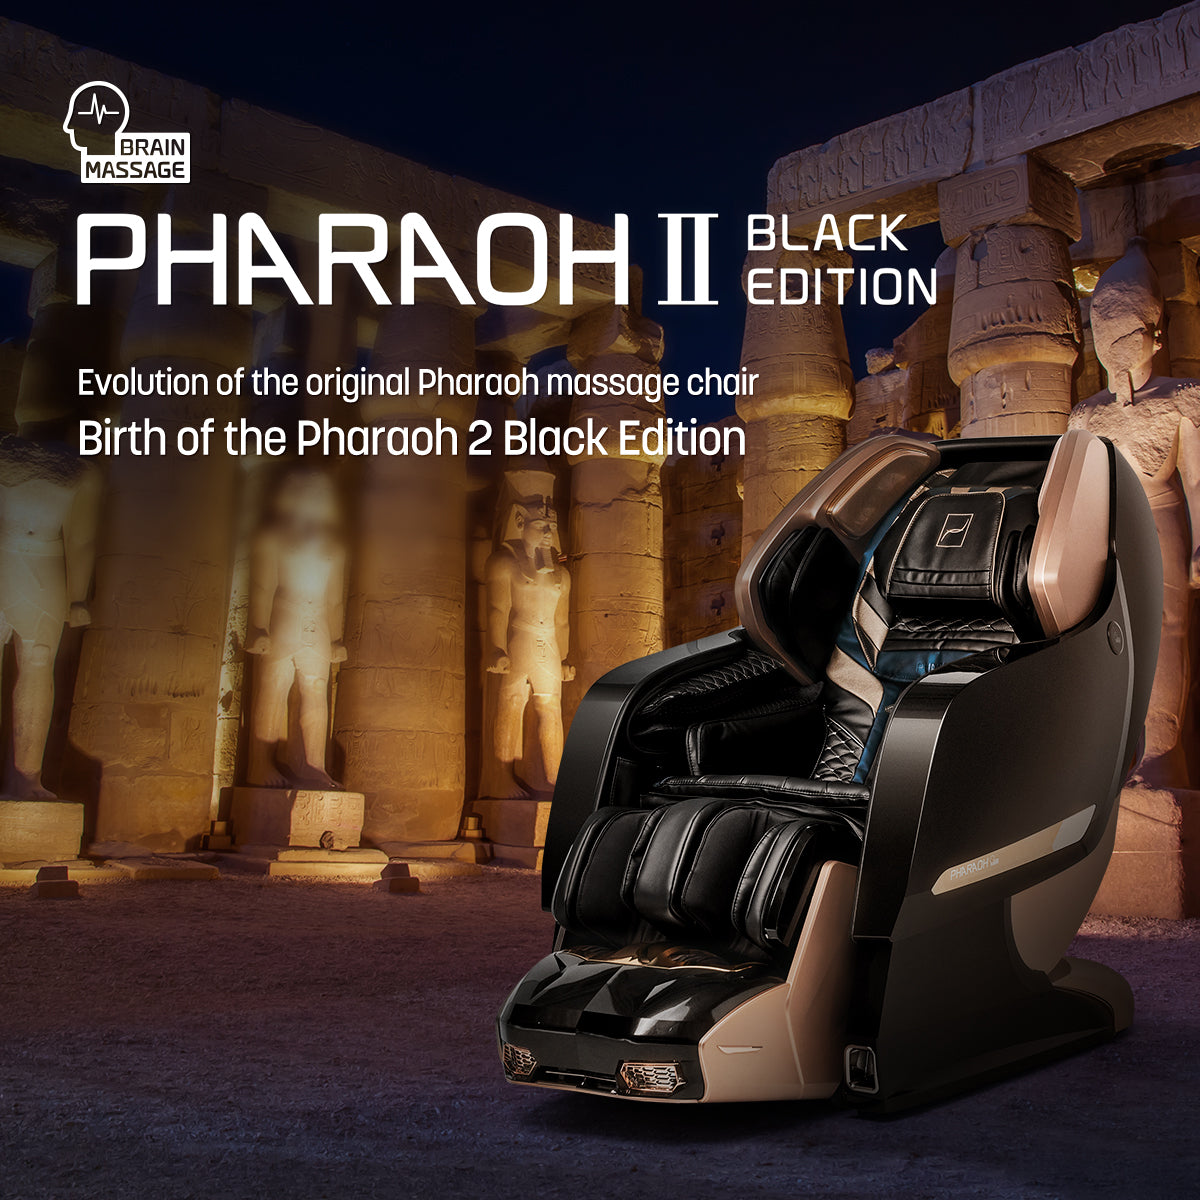 Evolution of the original Pharaoh massage chair. Birth of the Pharaoh 2 Black Edition